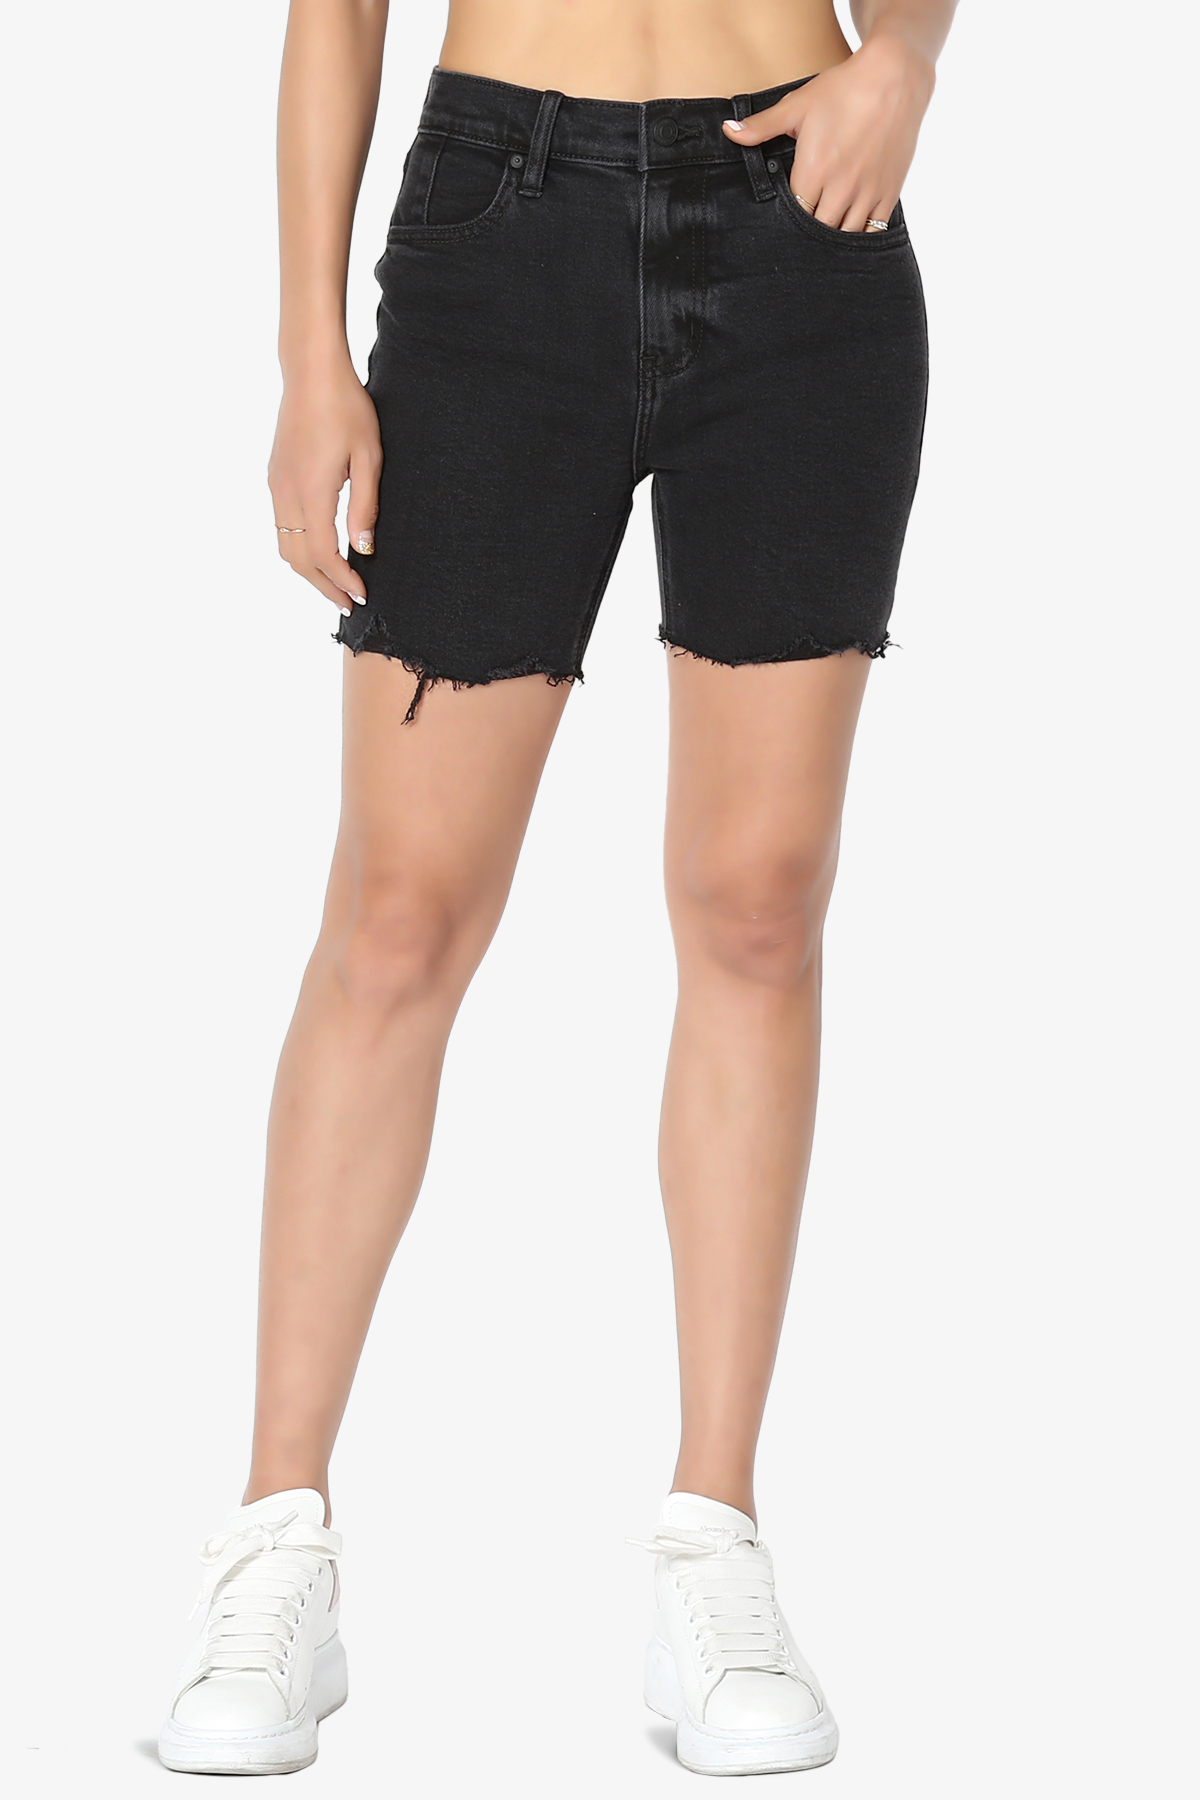 TheMogan Women's High Rise Mid Thigh Stretch Denim Skinny Jean Shorts Washed Black - image 2 of 7